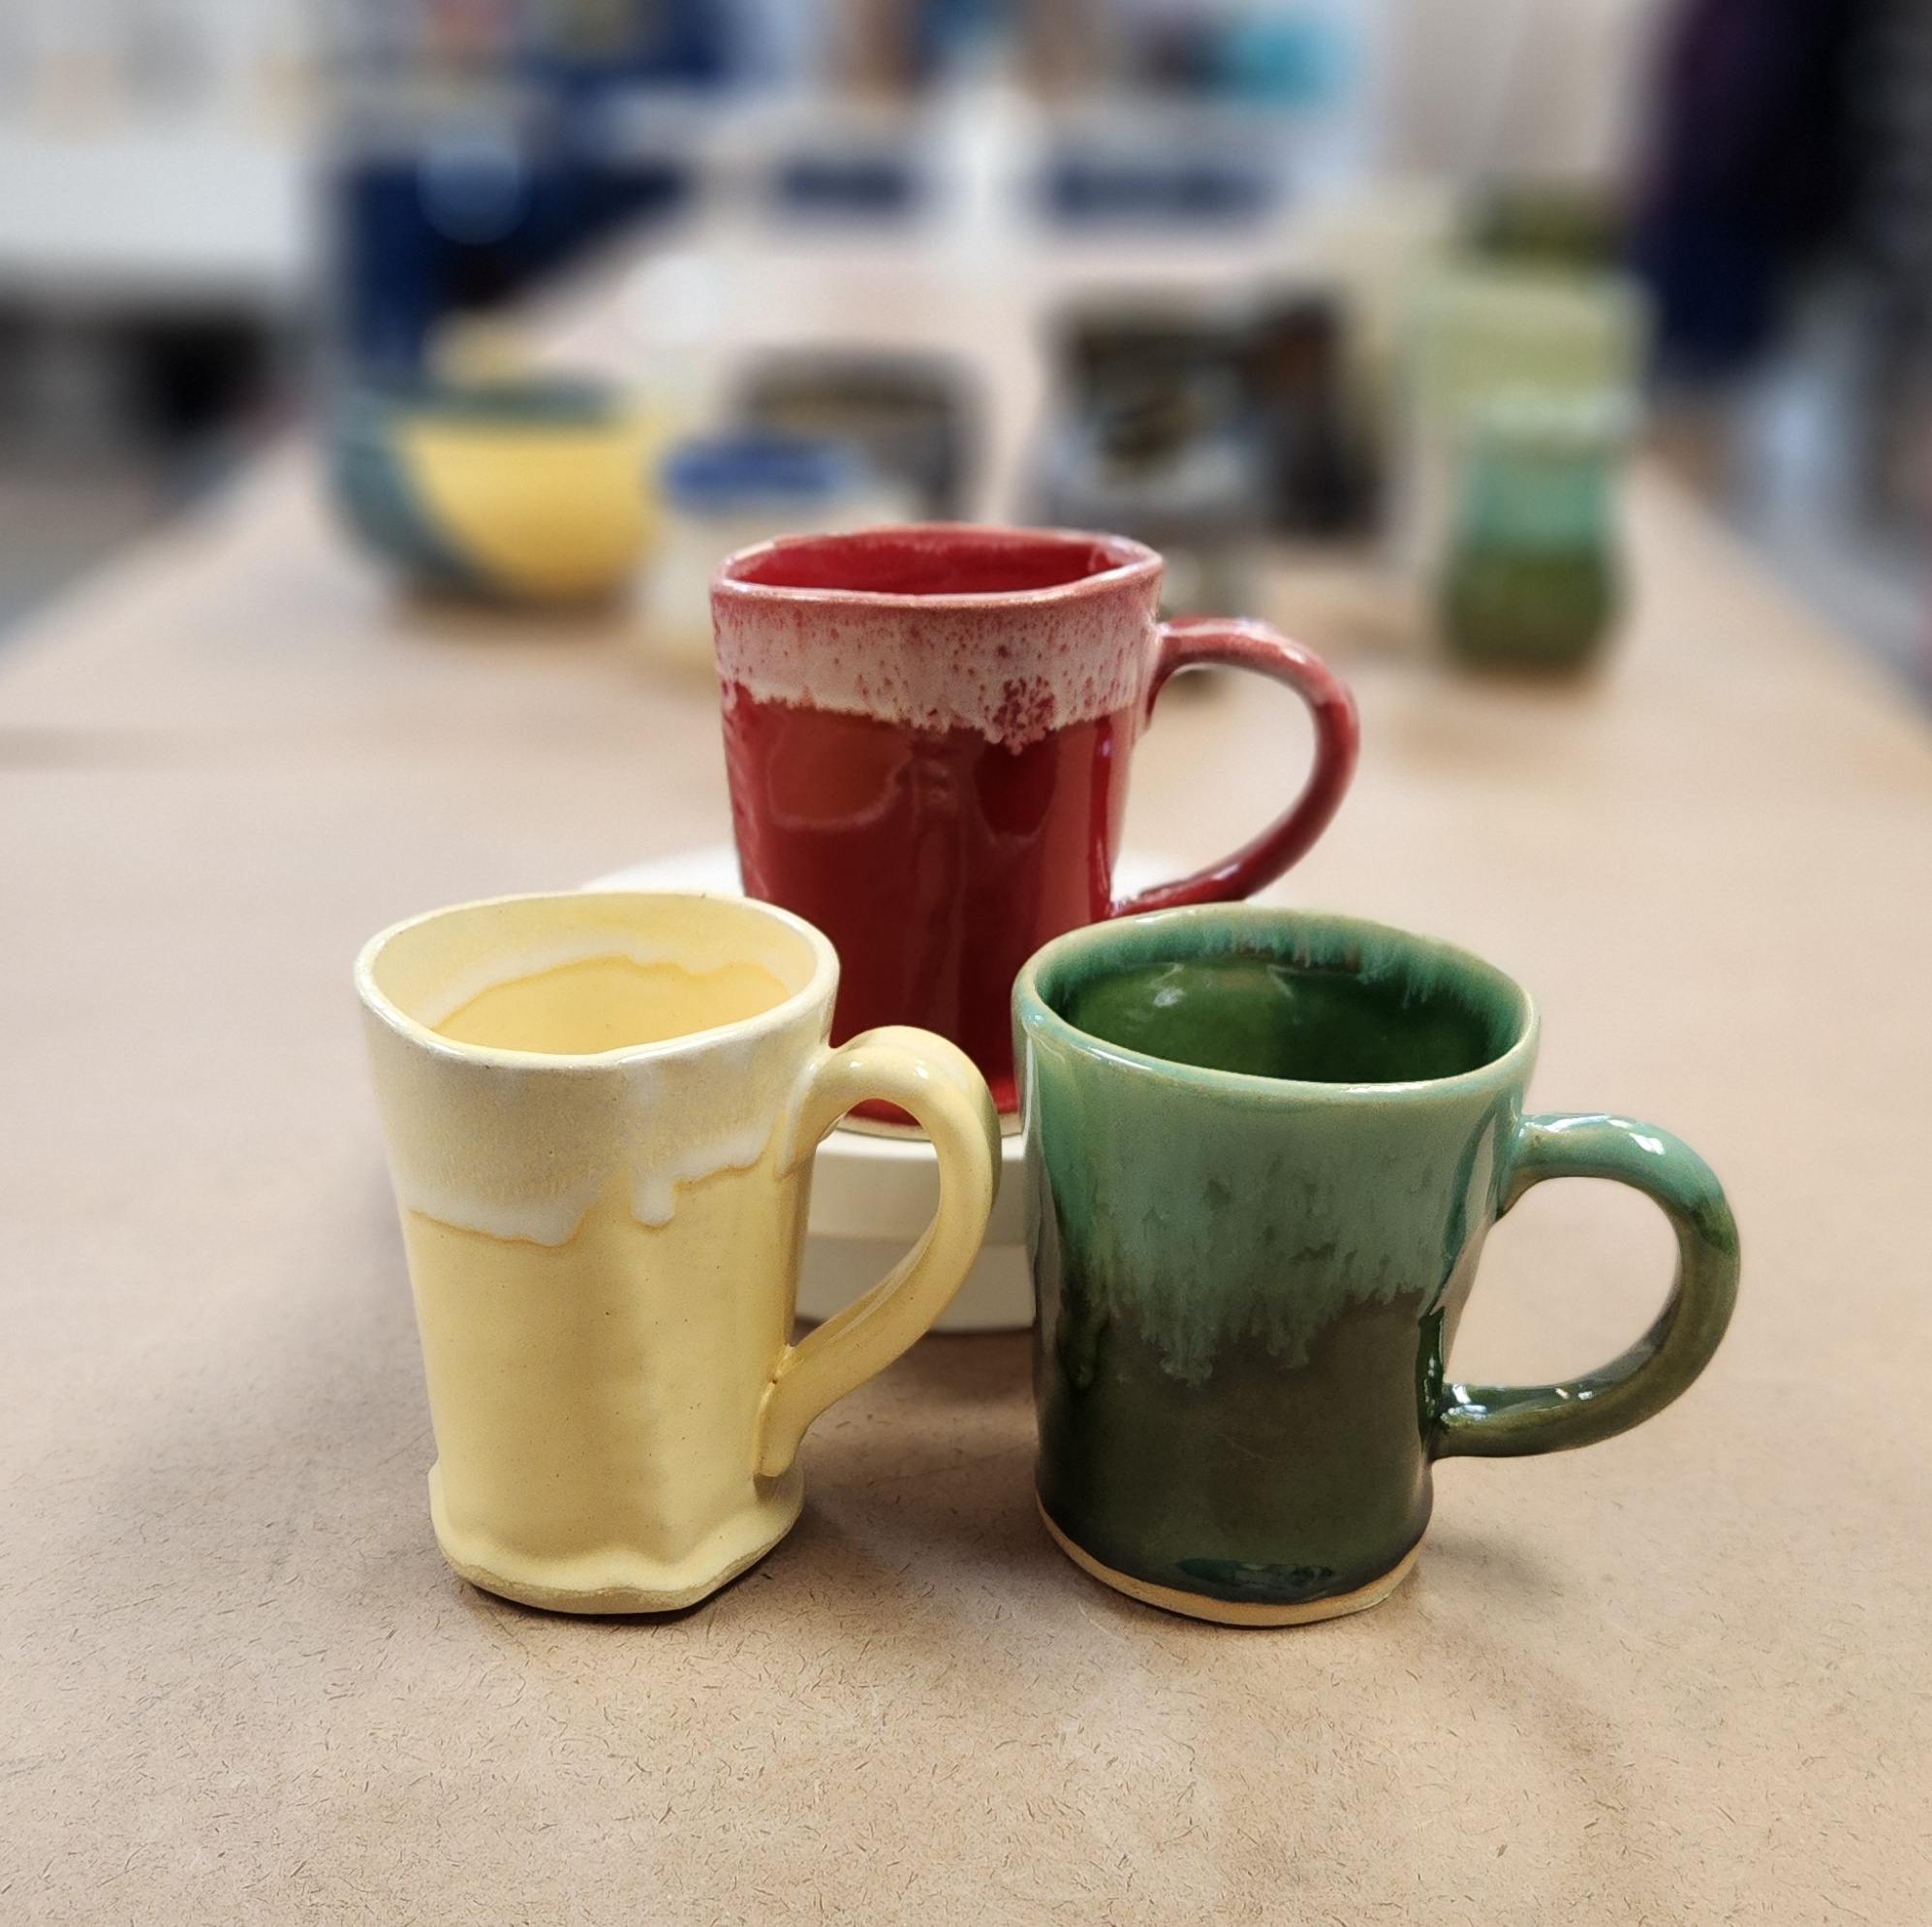 Make a Mug Workshop